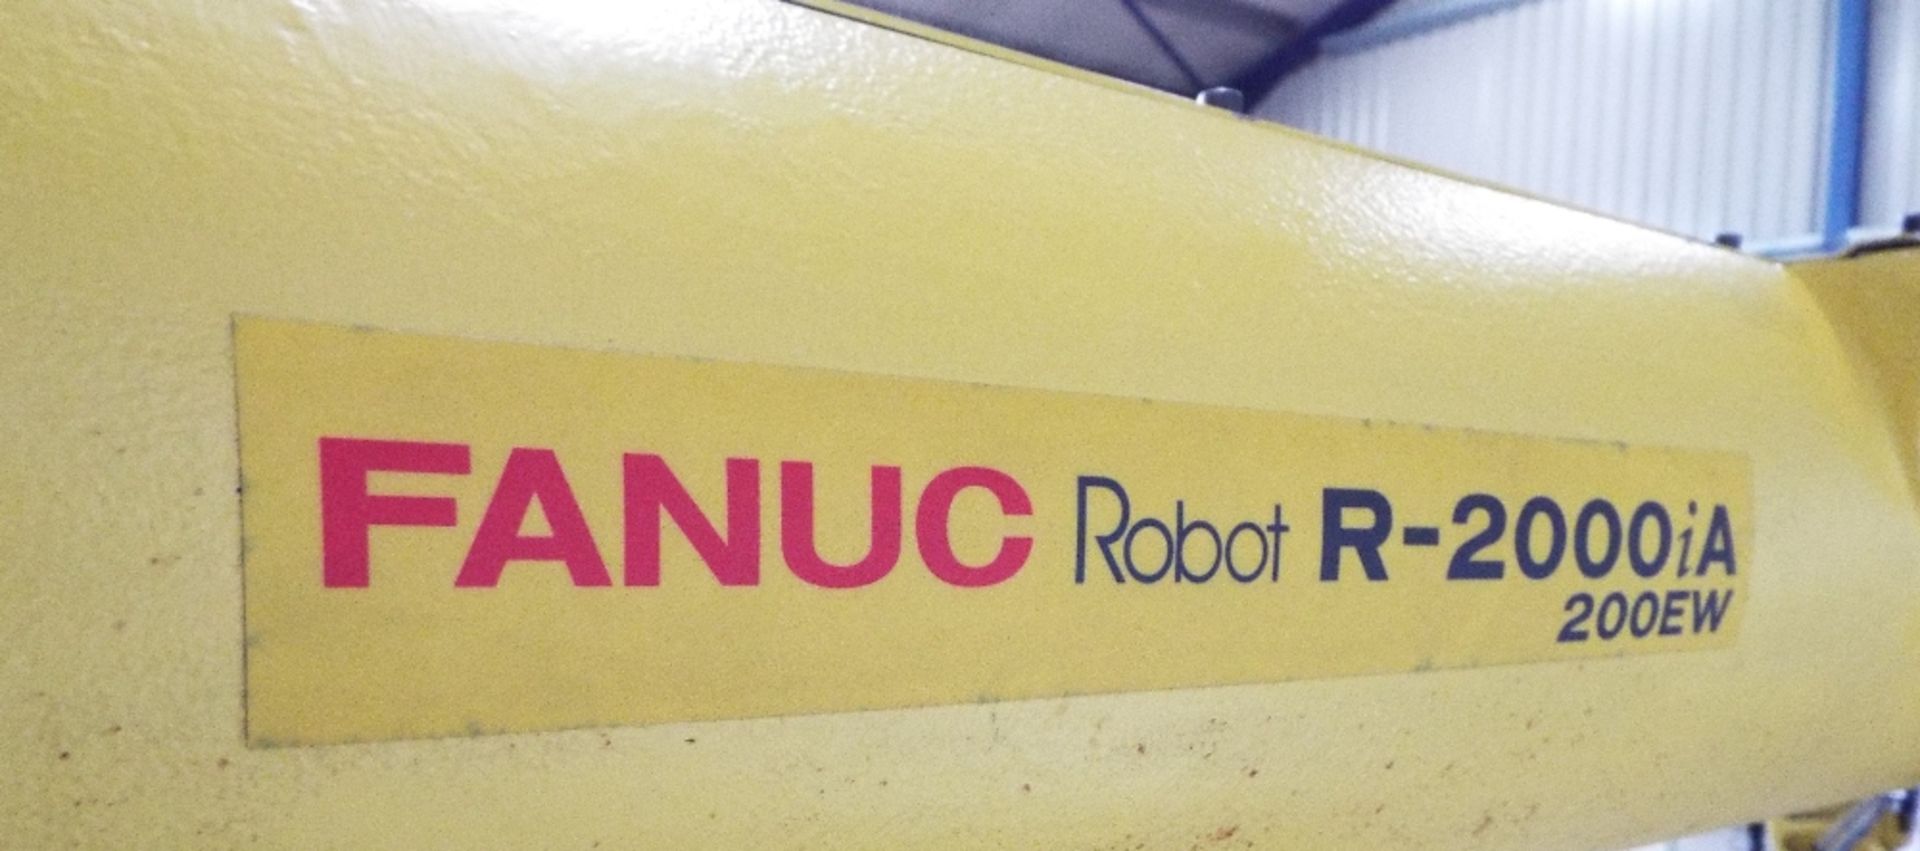 Fanuc Robot Type R-2000iA - 200EW - Image 3 of 9